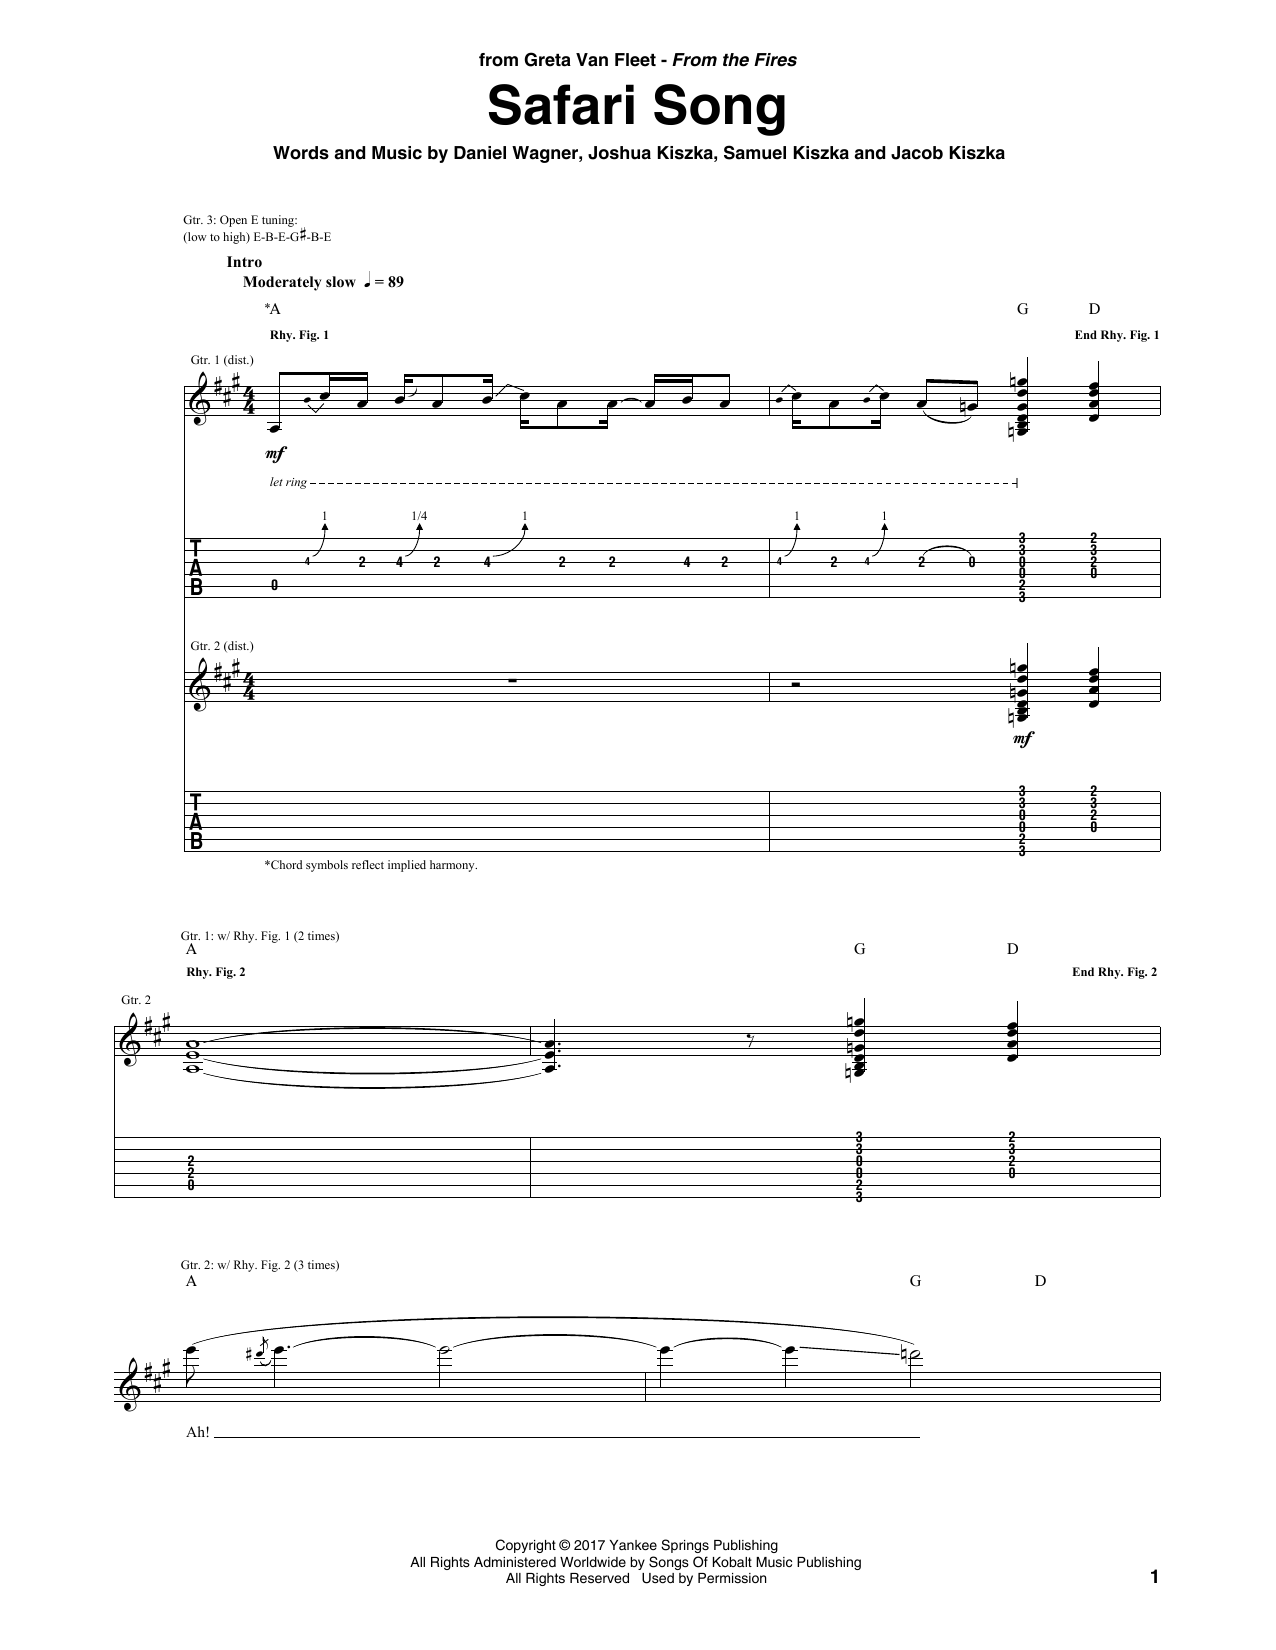 Greta Van Fleet Safari Song sheet music notes and chords arranged for Guitar Tab